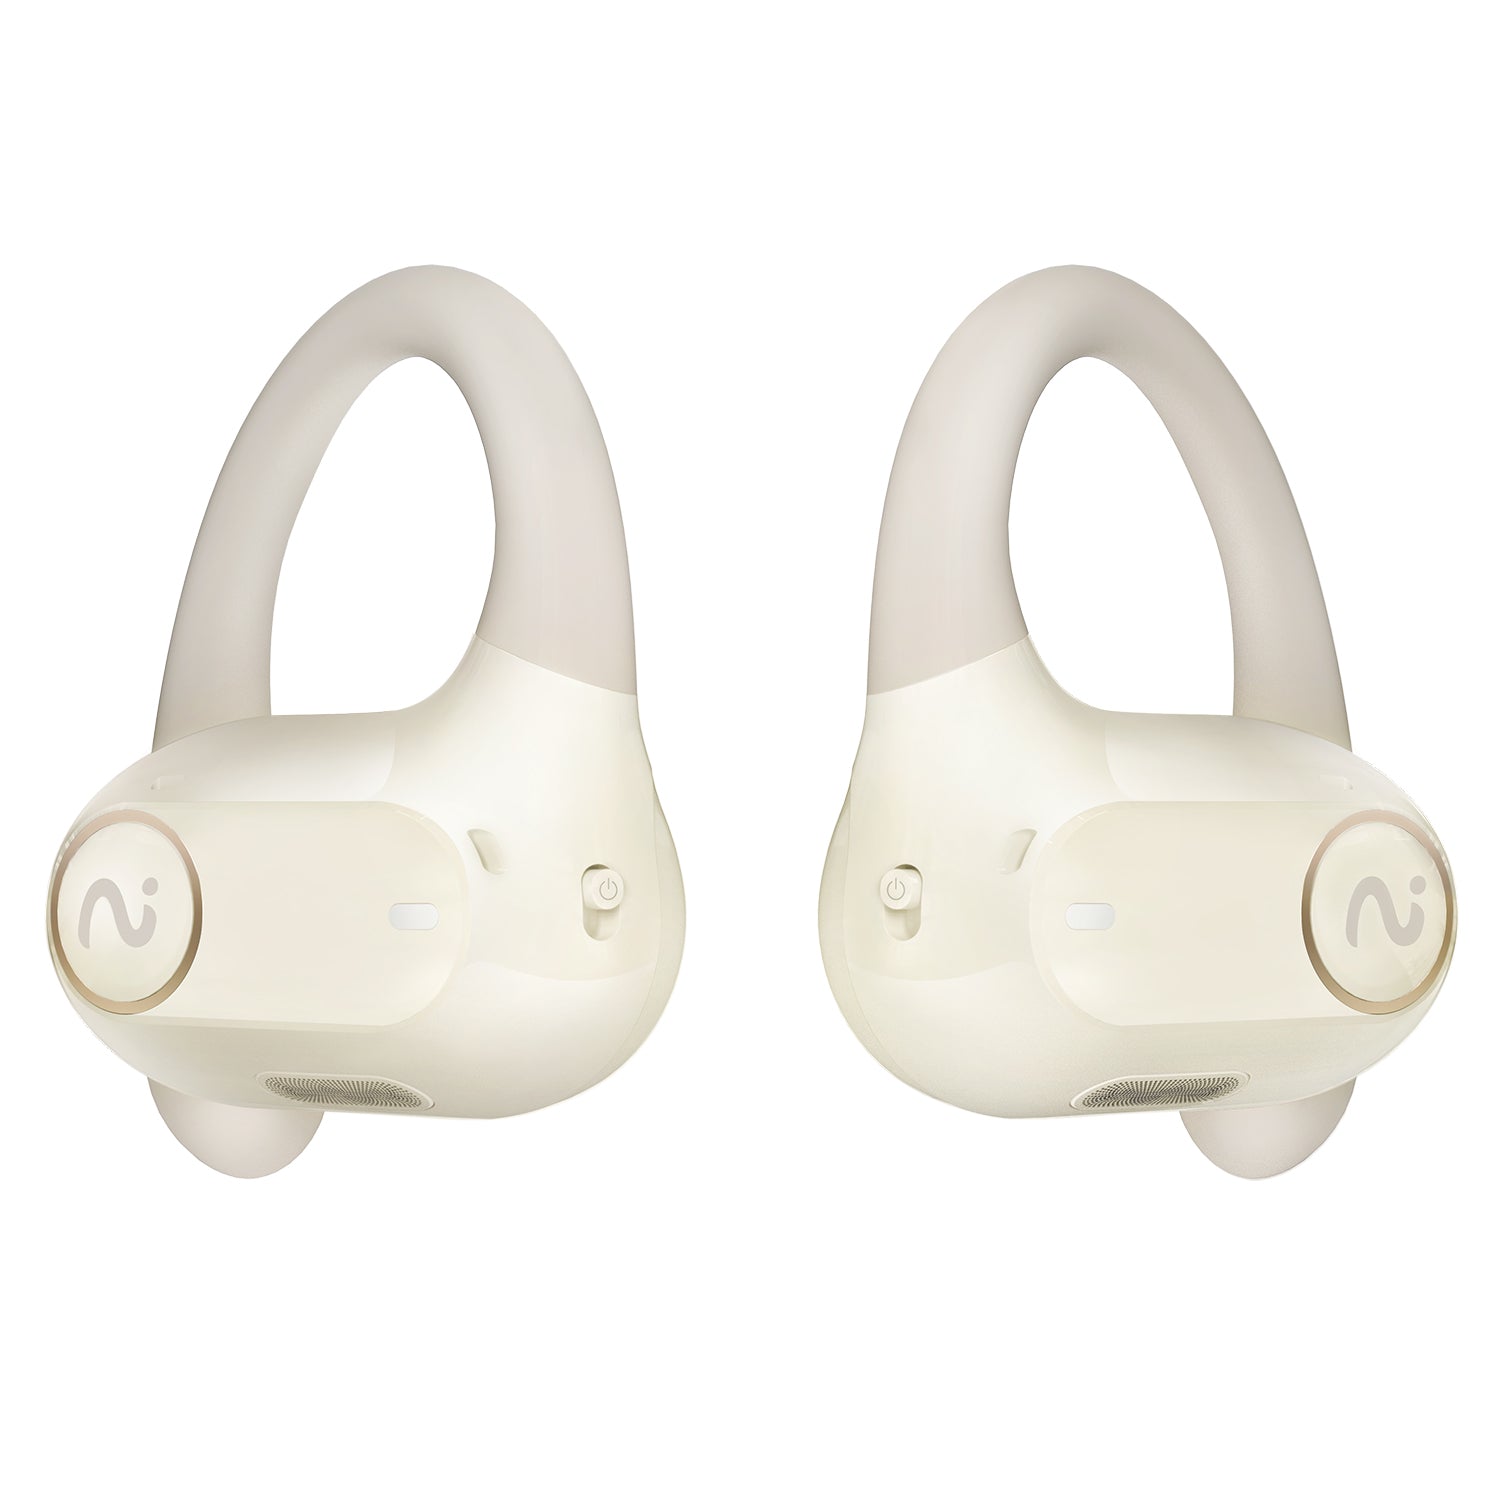 VIAIM Air Open-Ear AI Recording True Wireless Earbuds (White)